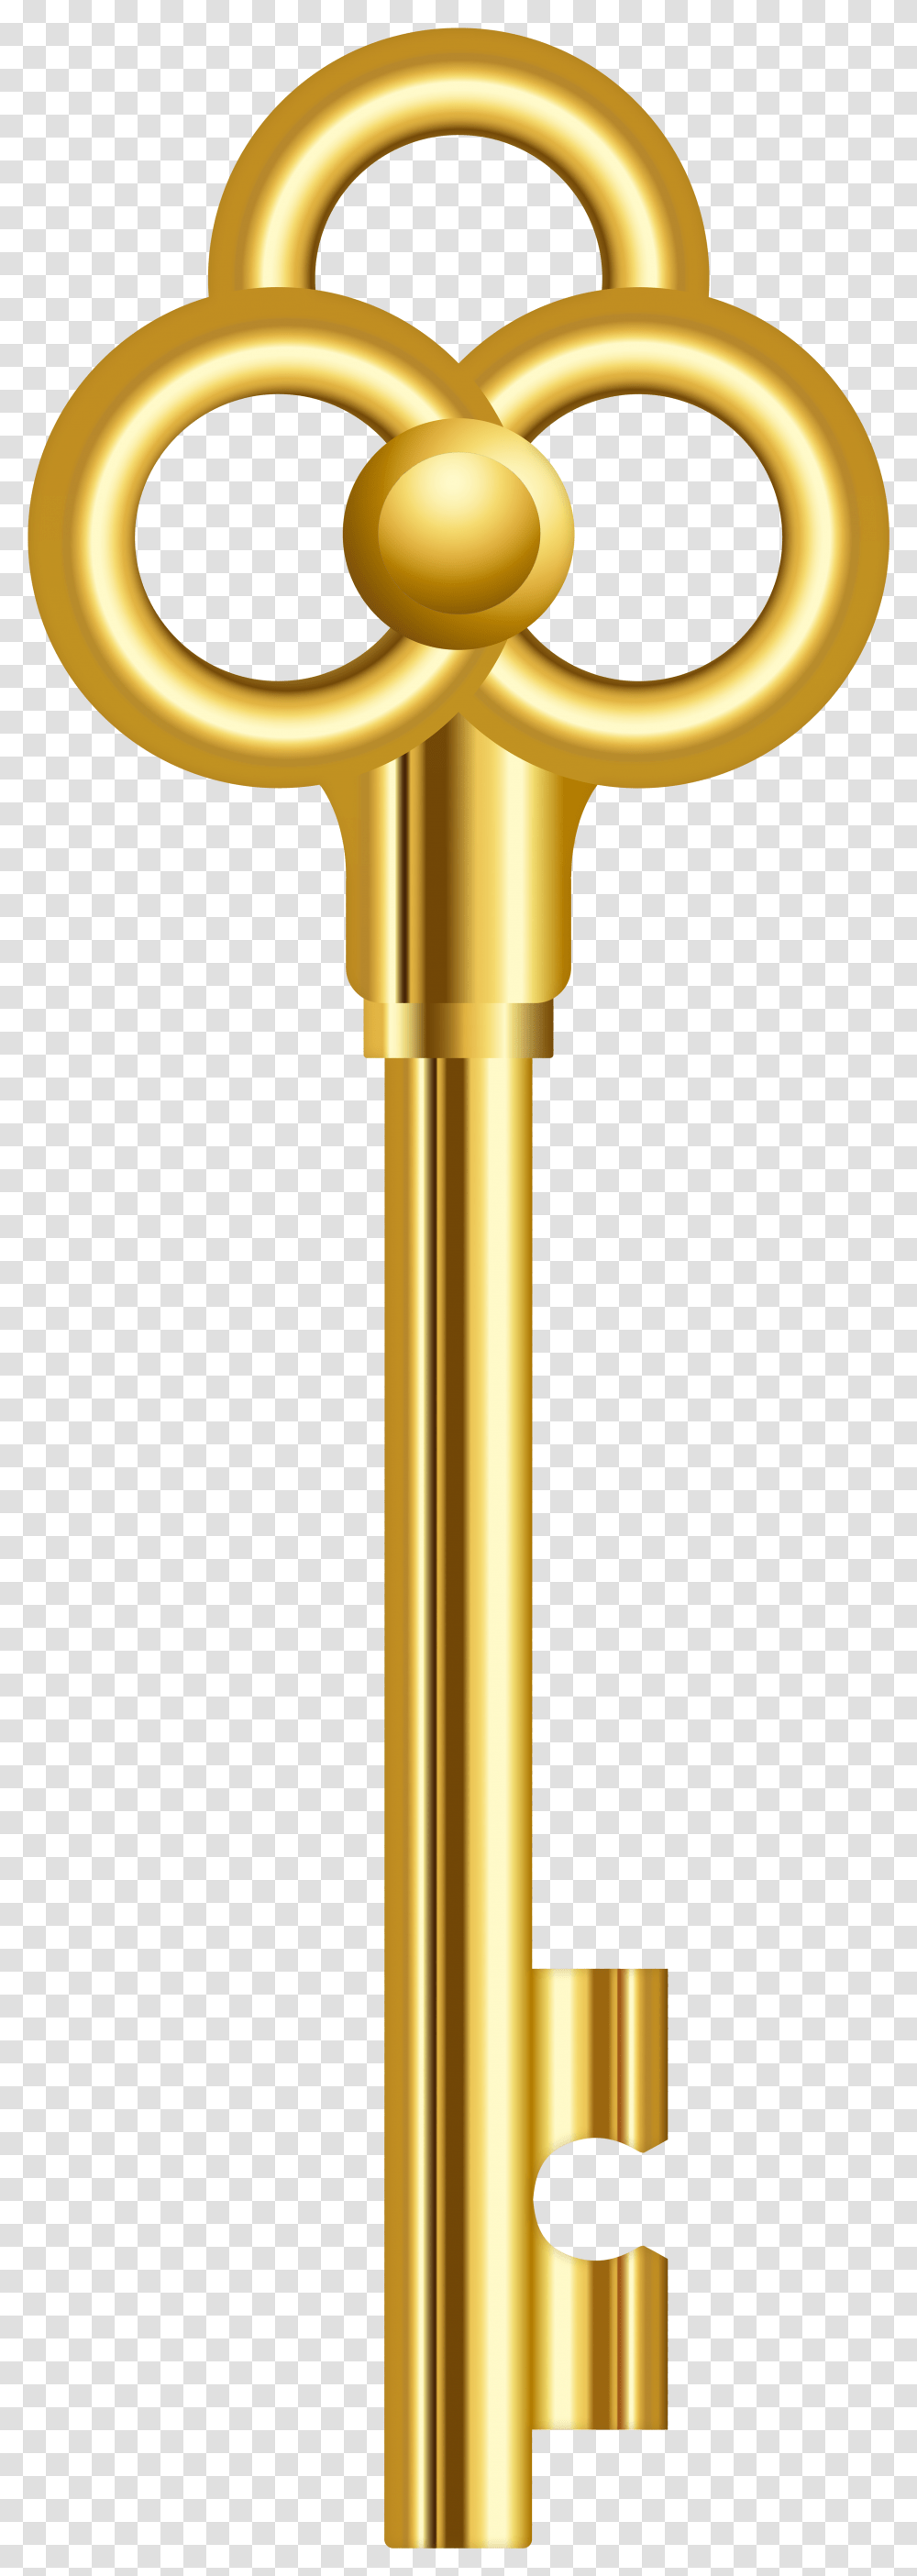 Golden Key, Stick, Cane, Lamp, Brass Section Transparent Png